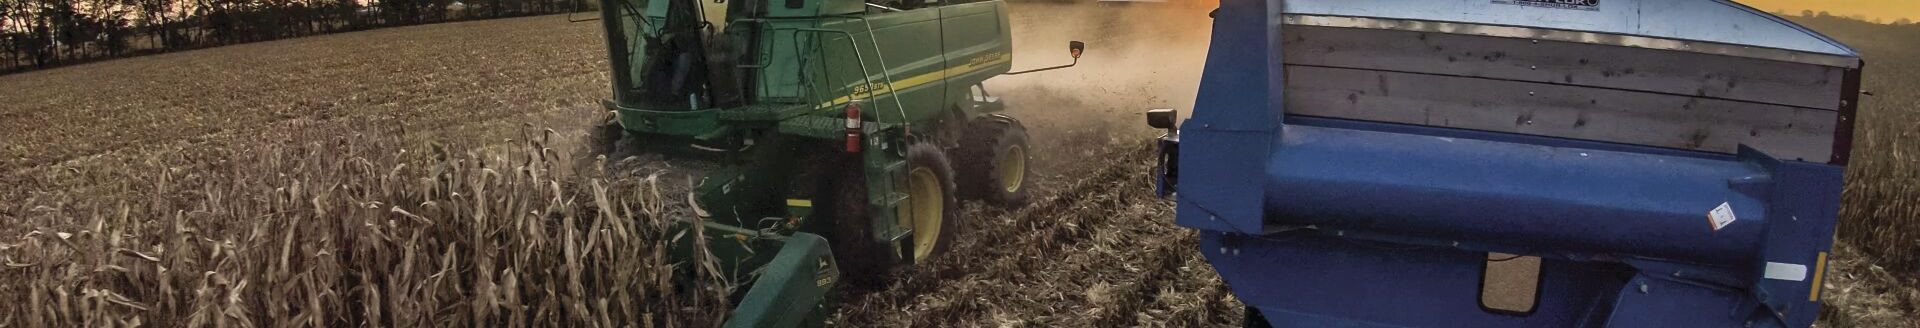 Corn harvest (Photo: Keith Werner - Wanatah, Indiana)